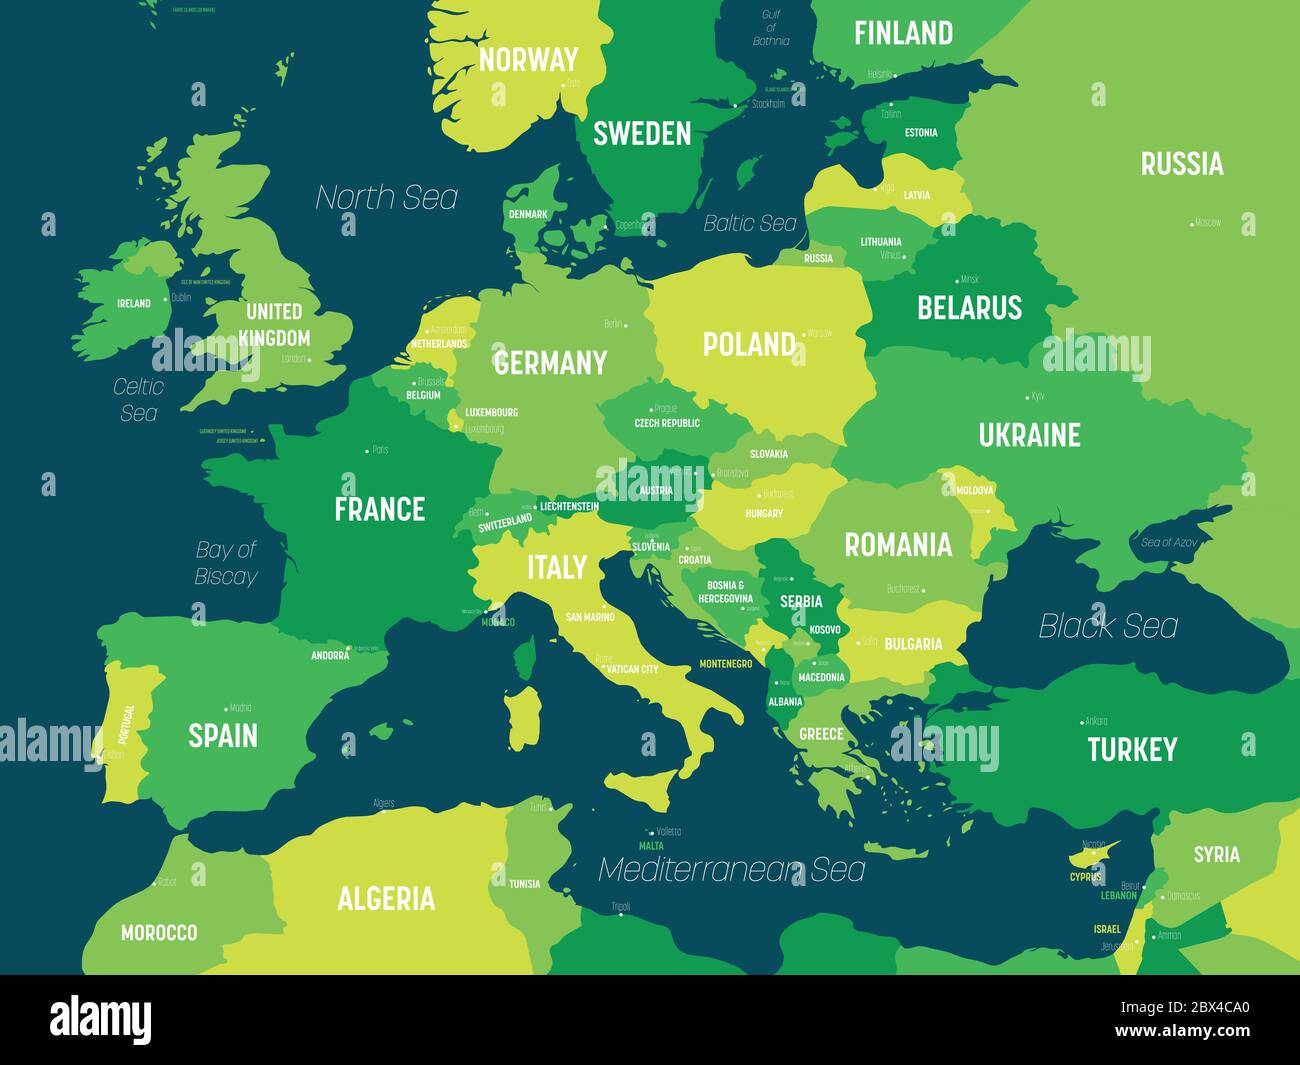 Mapa de Europa: Tono verde sobre fondo oscuro. Mapa político de alto nivel  de detalle del continente europeo con etiquetado de nombres de países,  capitales, océanos y mares Imagen Vector de stock -